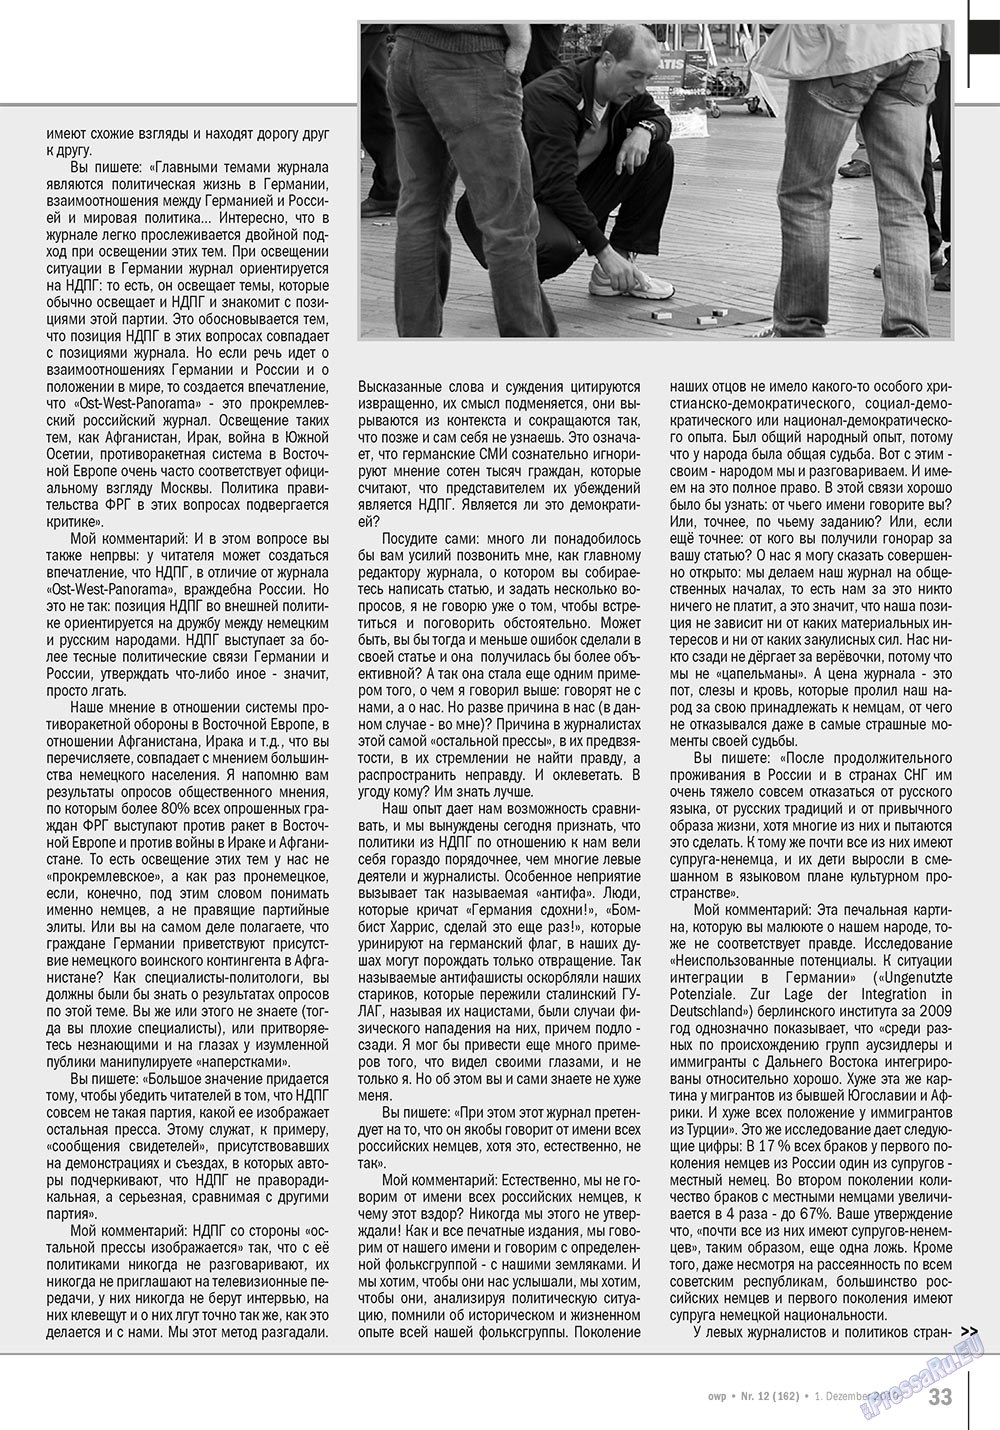 Ost-West Panorama, журнал. 2010 №12 стр.33